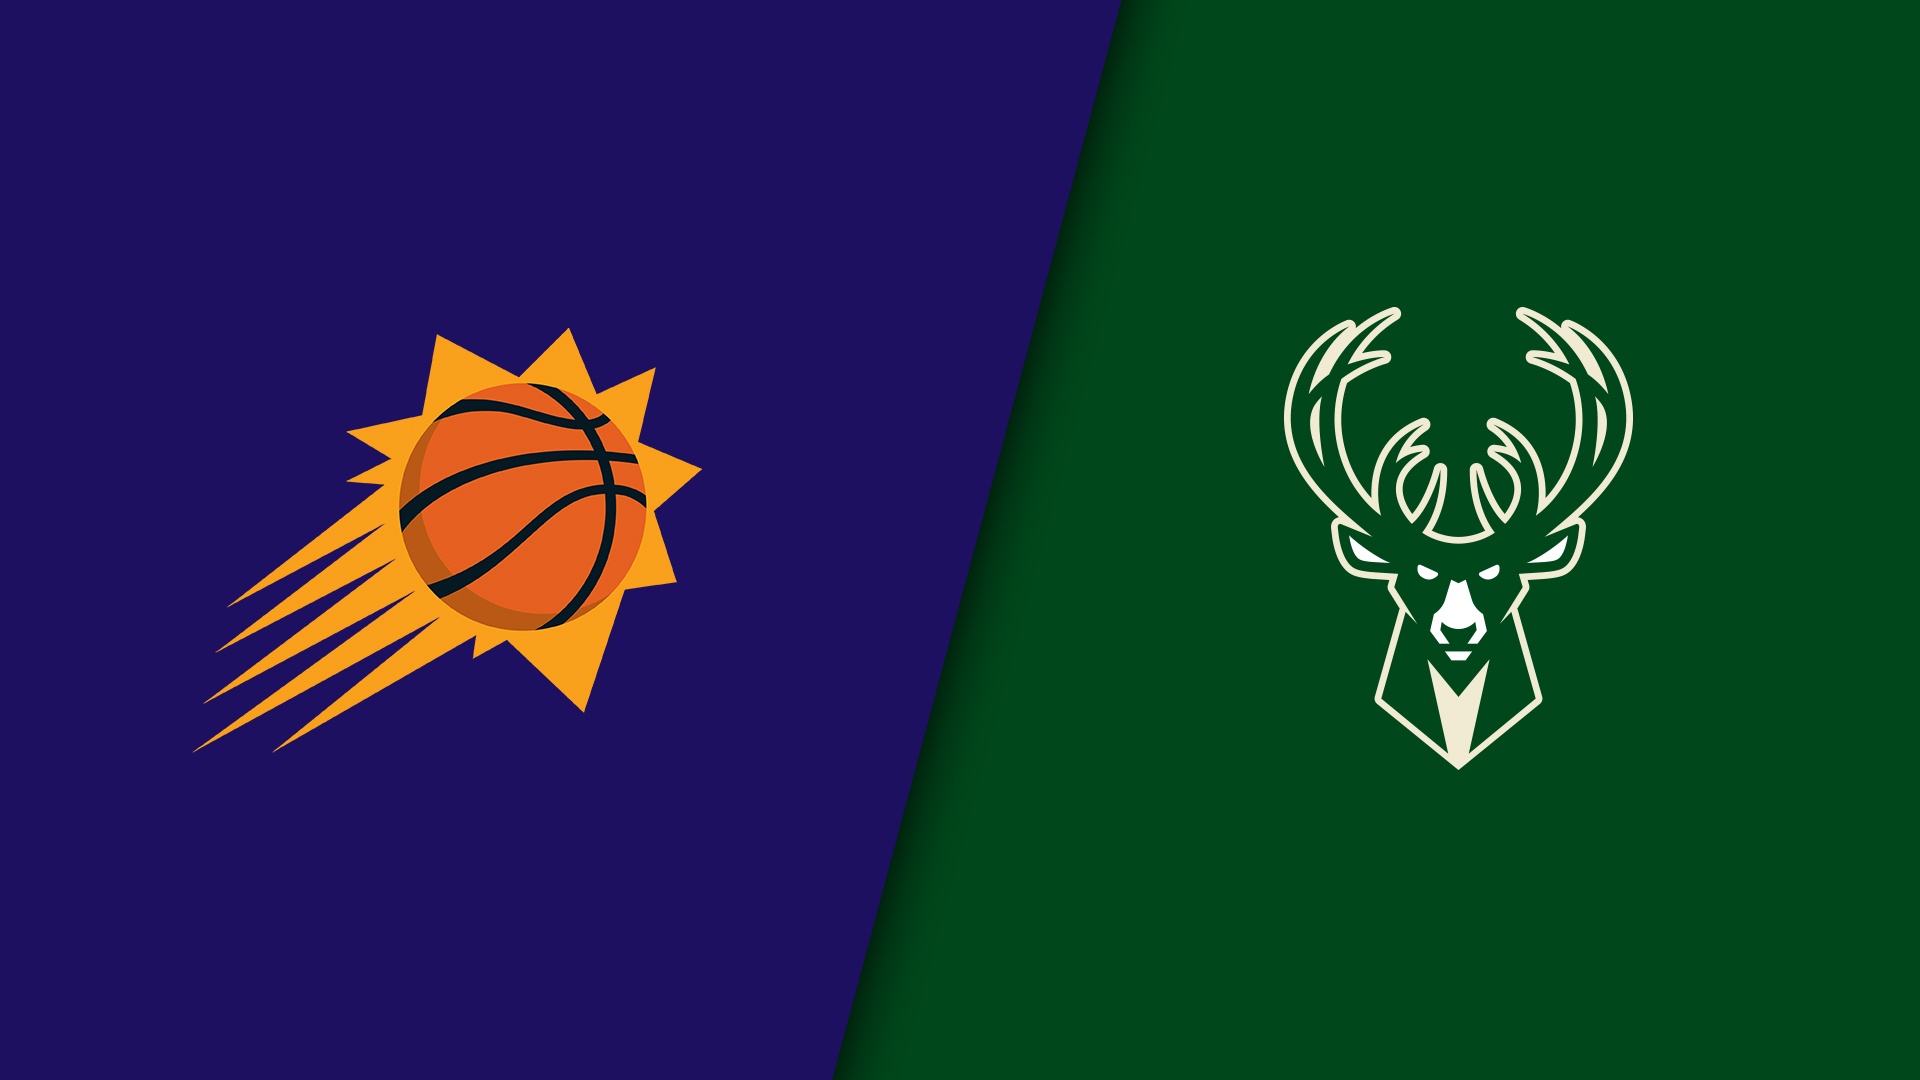 Phoenix Suns vs Milwaukee Bucks